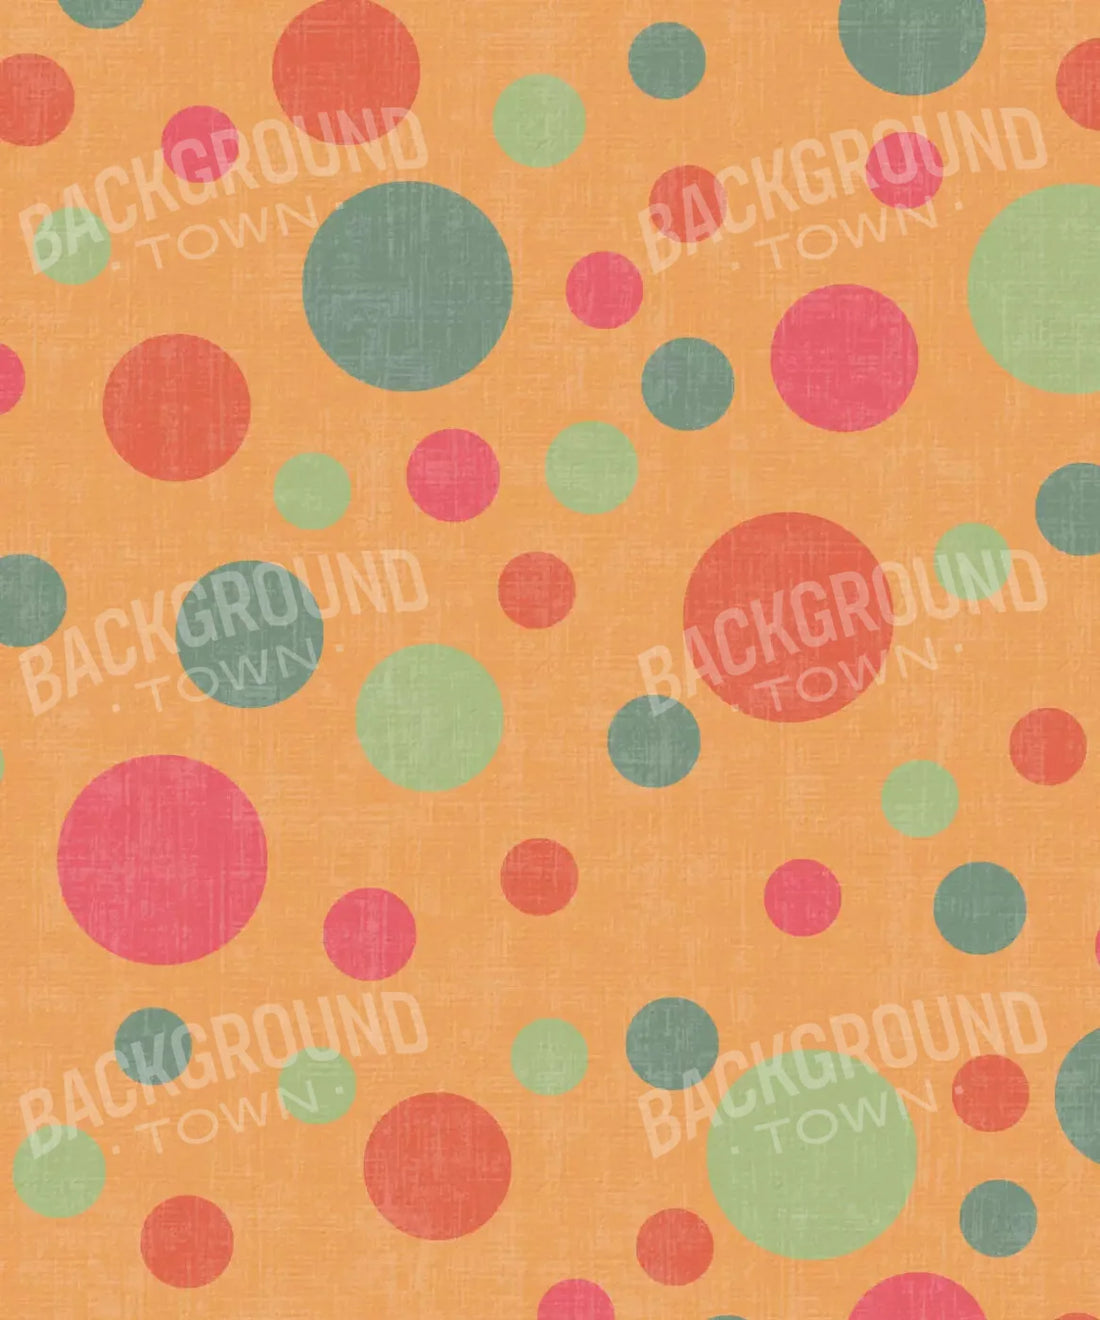 Orange Pattern Backdrop for Photography